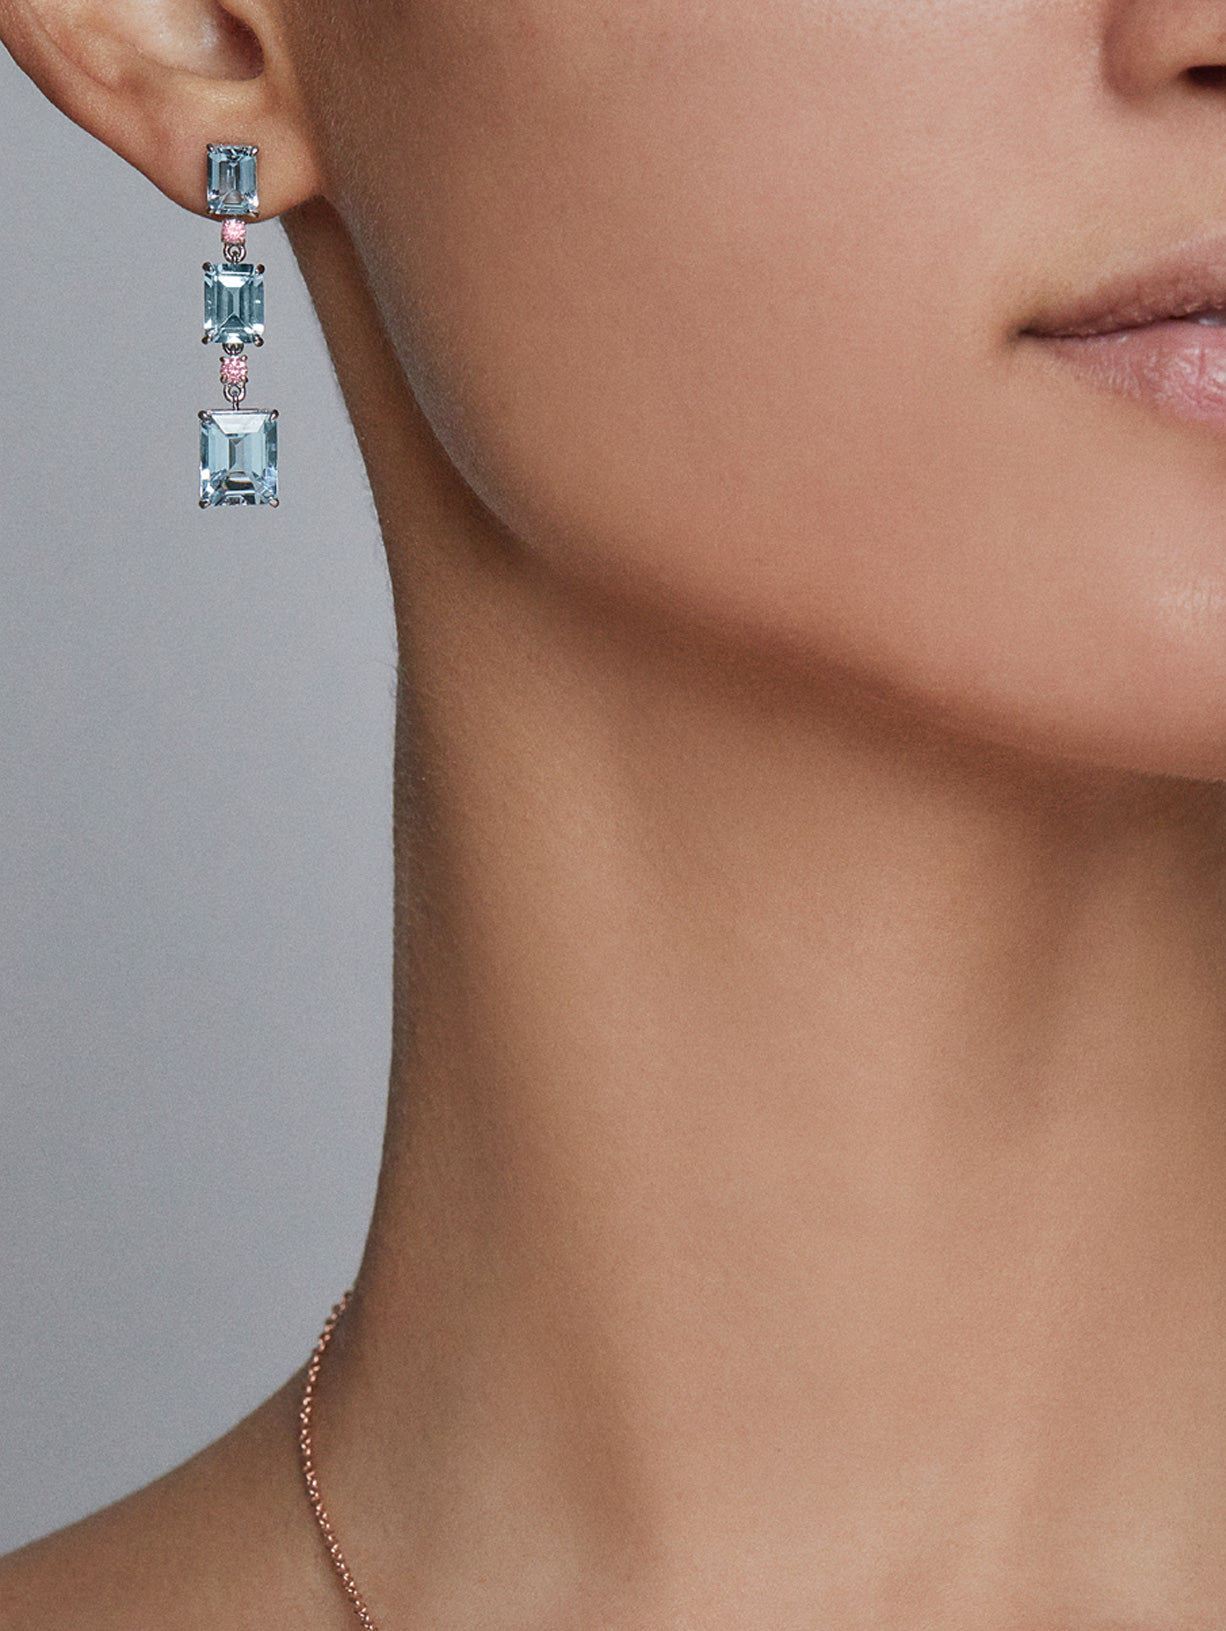 Pink Diamond and Aquamarine Earrings on Fashion Model